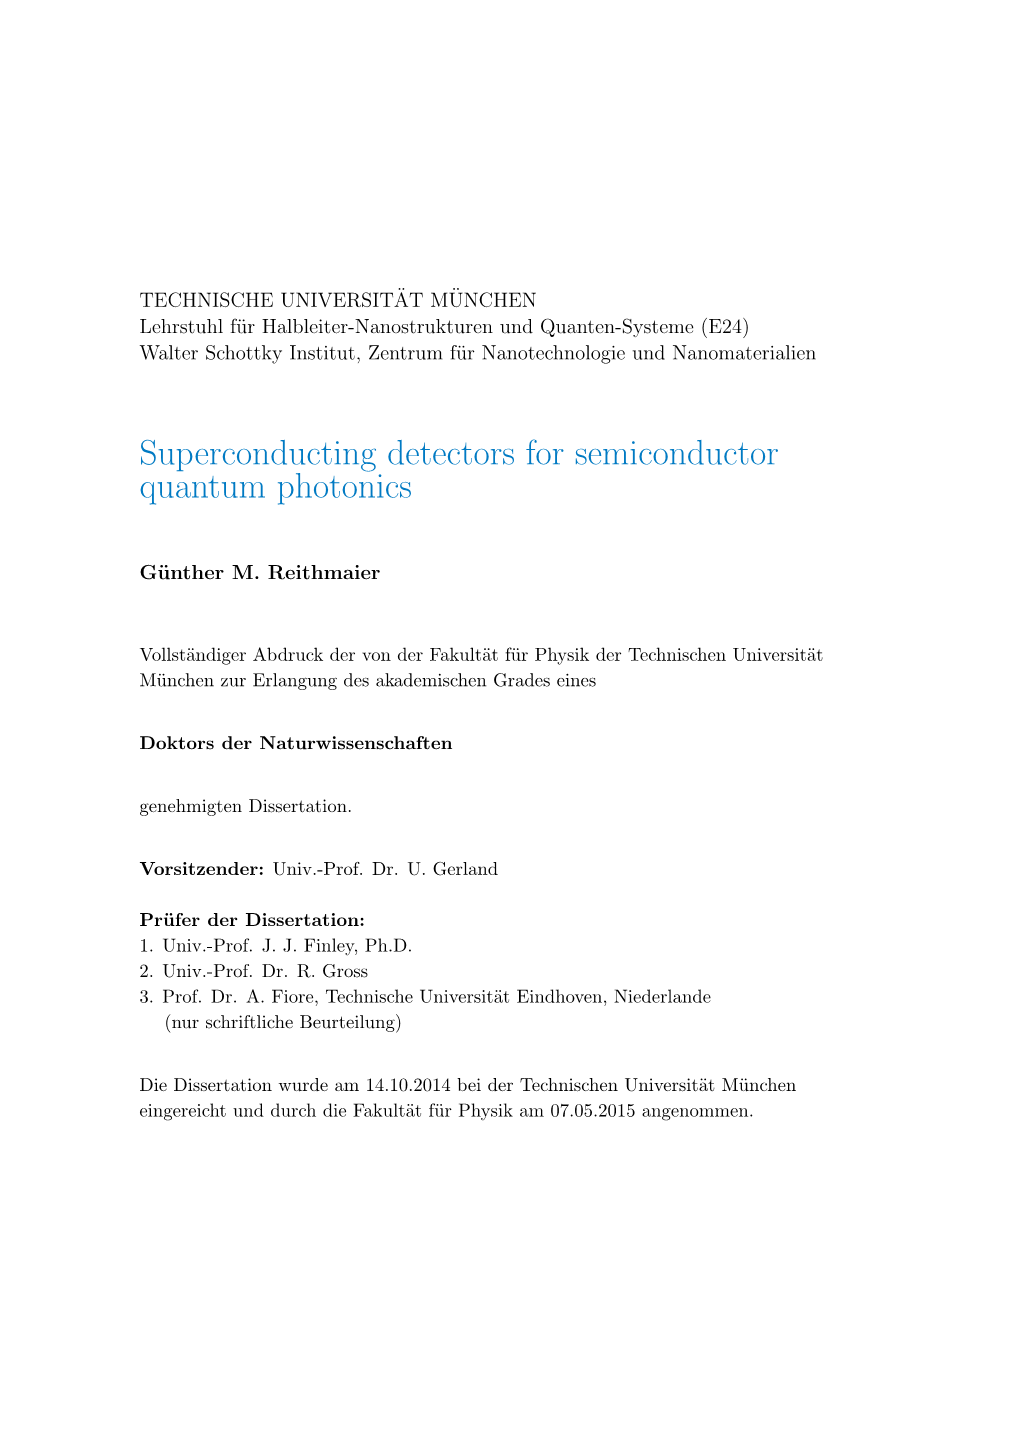 Superconducting Detectors for Semiconductor Quantum Photonics